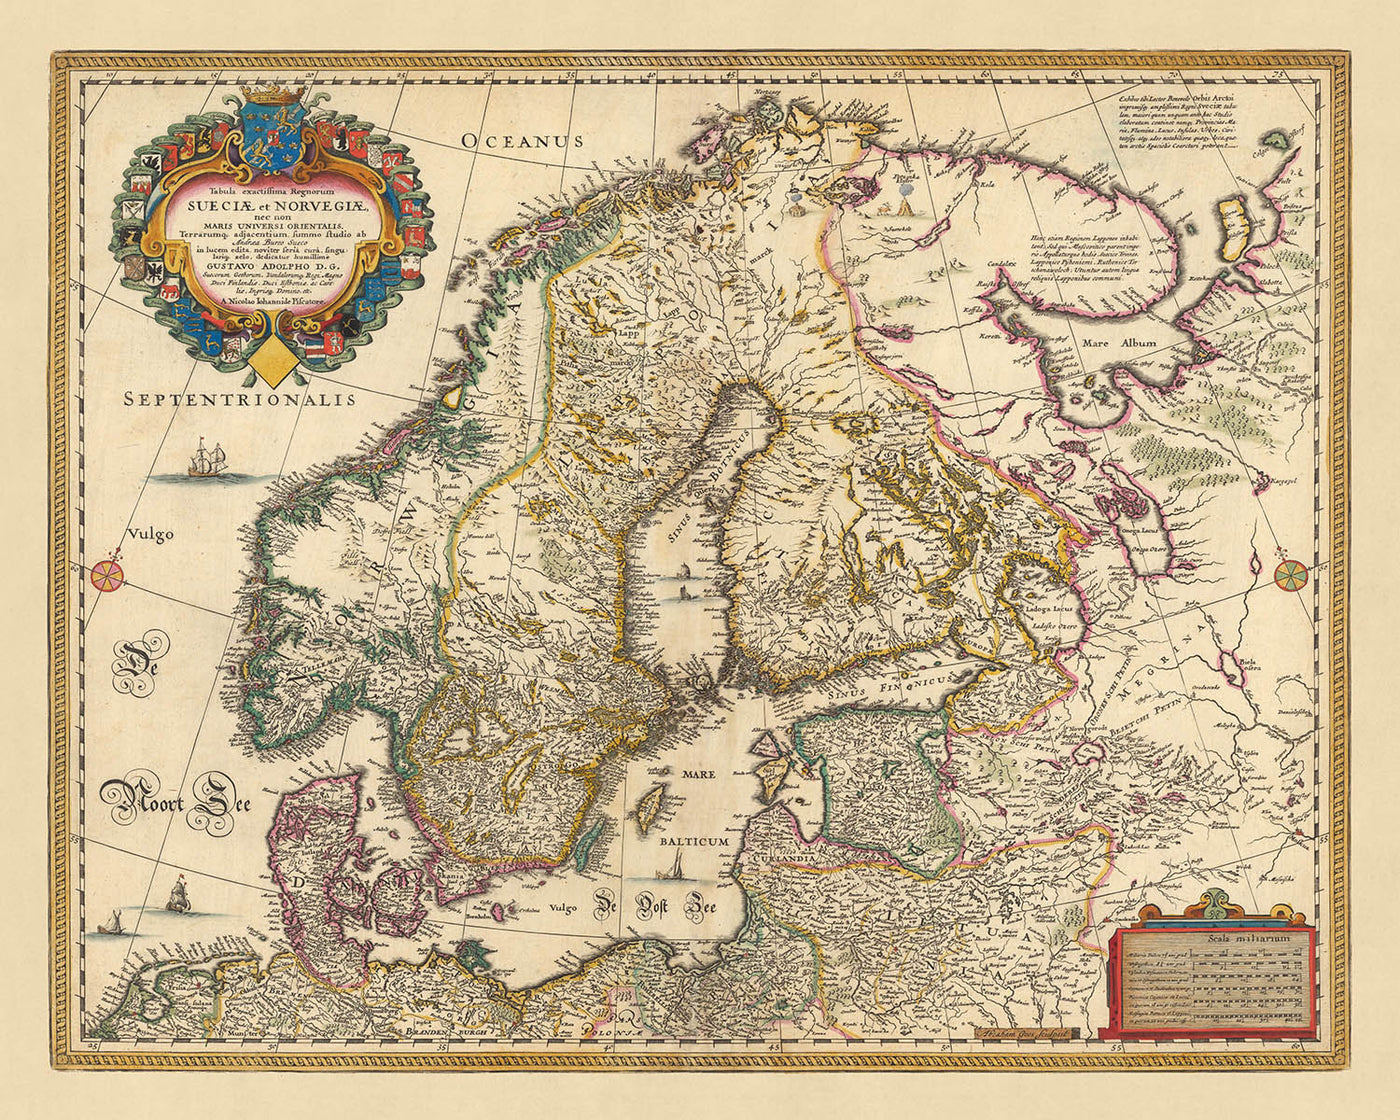 Old Map of Scandinavia and North Europe by Visscher, 1690: Oslo, Stockholm, Helsinki, Riga, Copenhagen